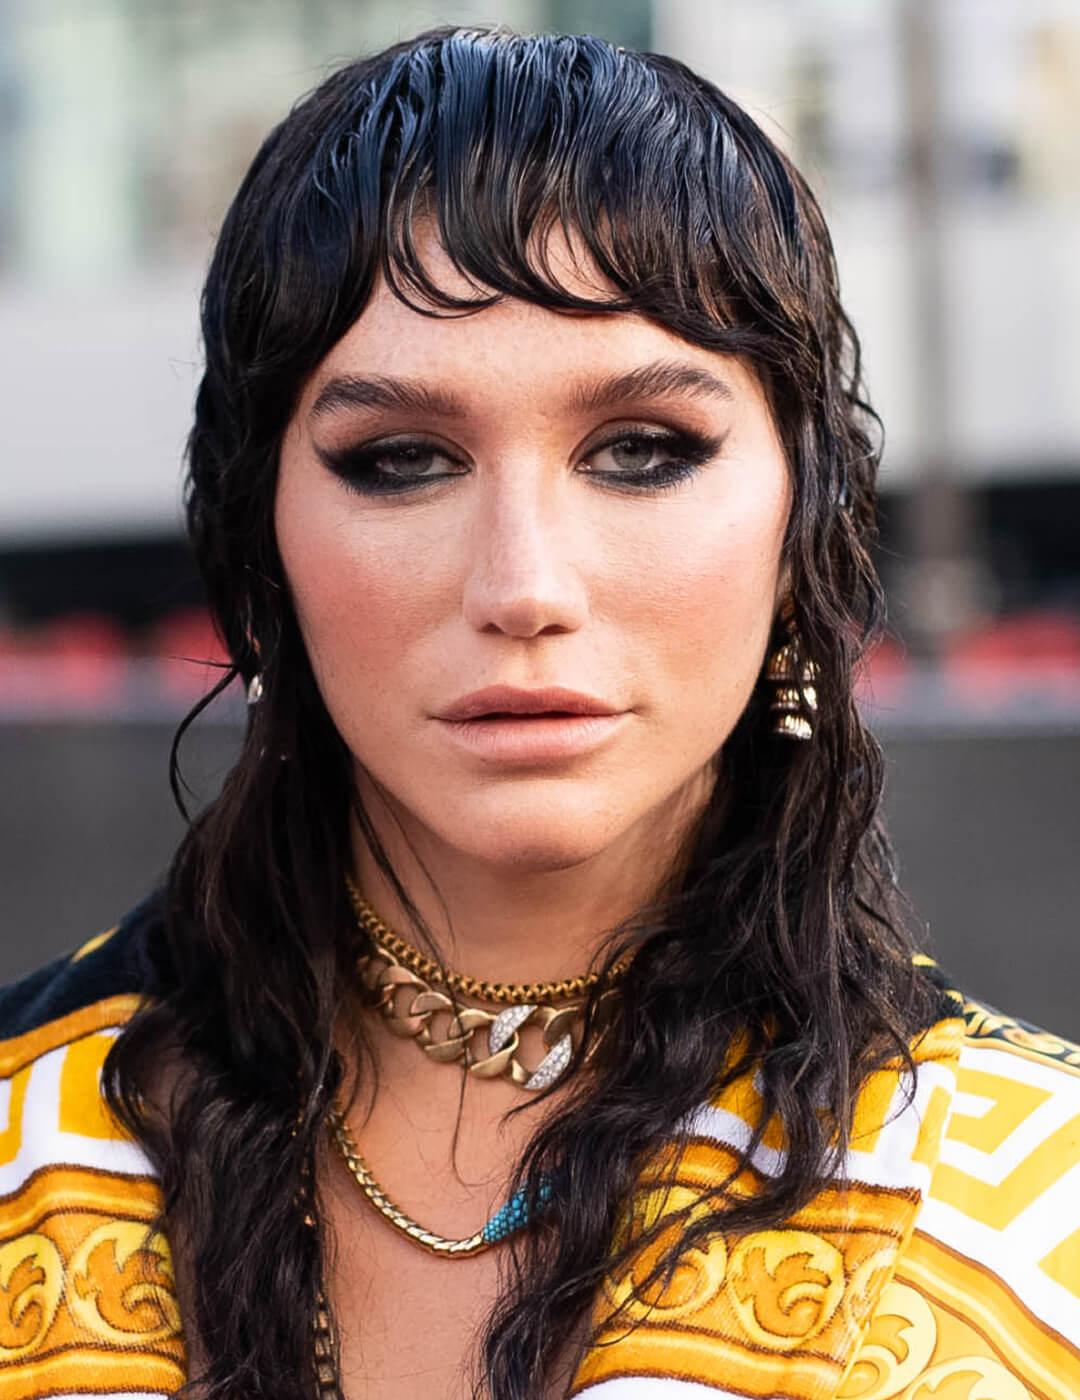 Kesha rocking a modern mullet hairstyle and smoky eyeshadow makeup look